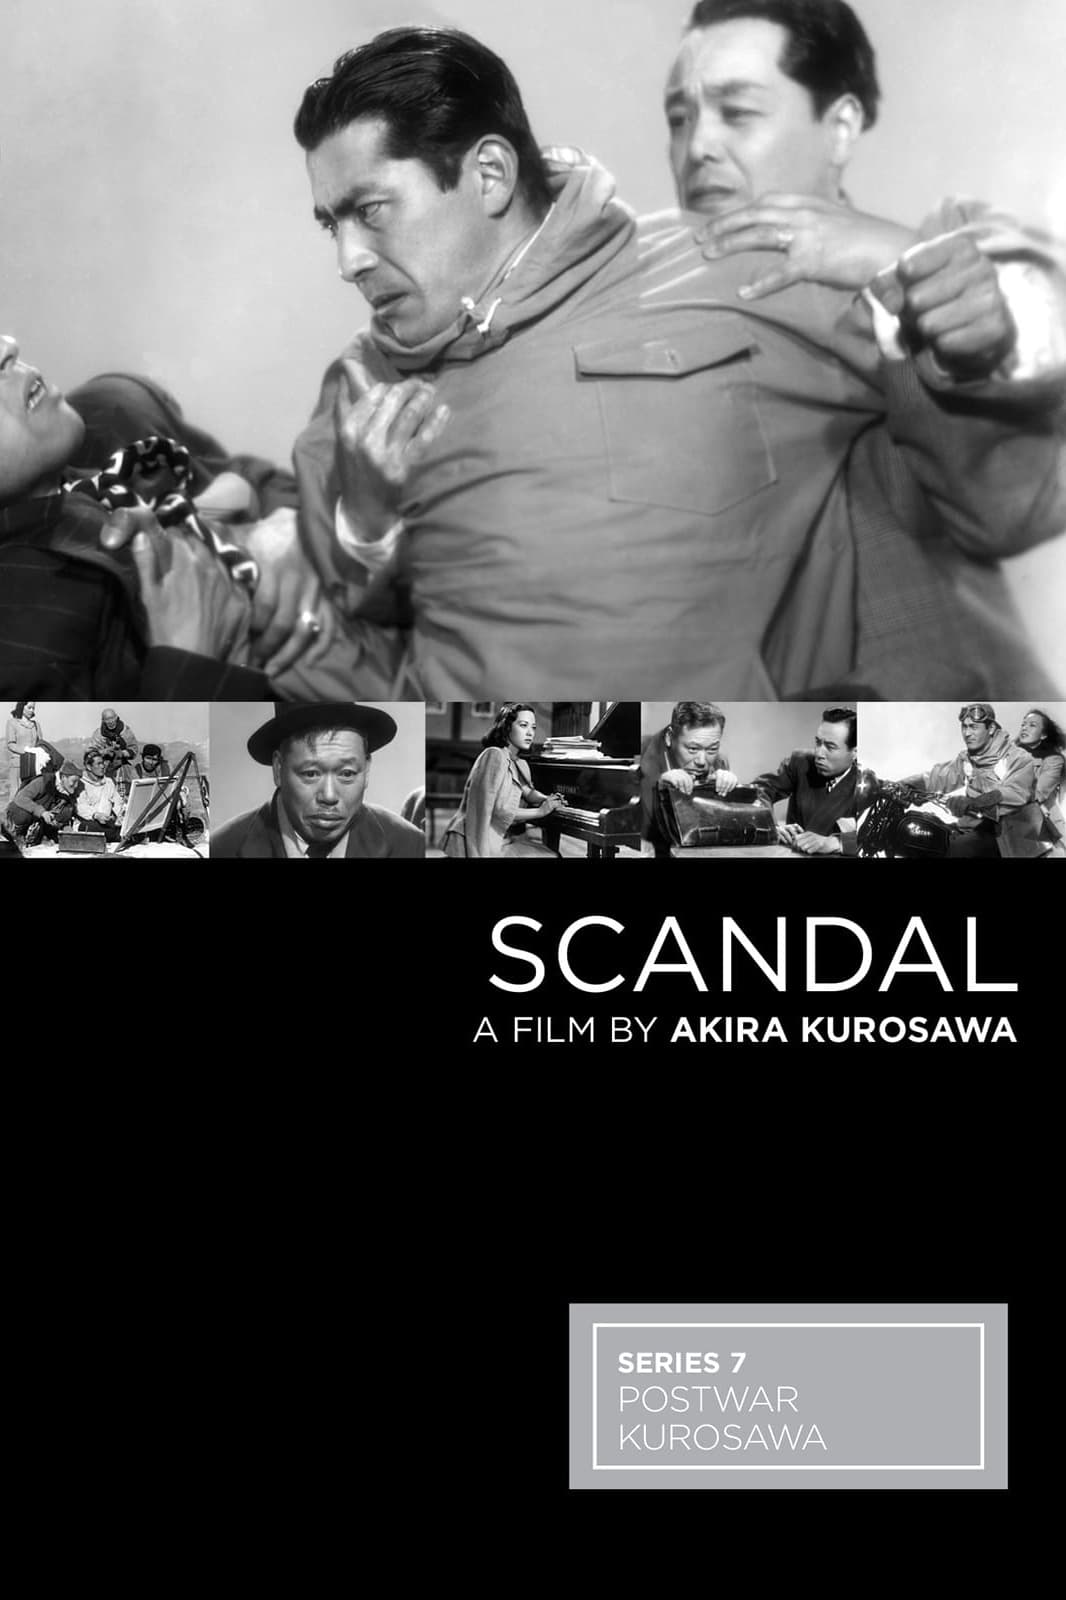 Scandal (1950)